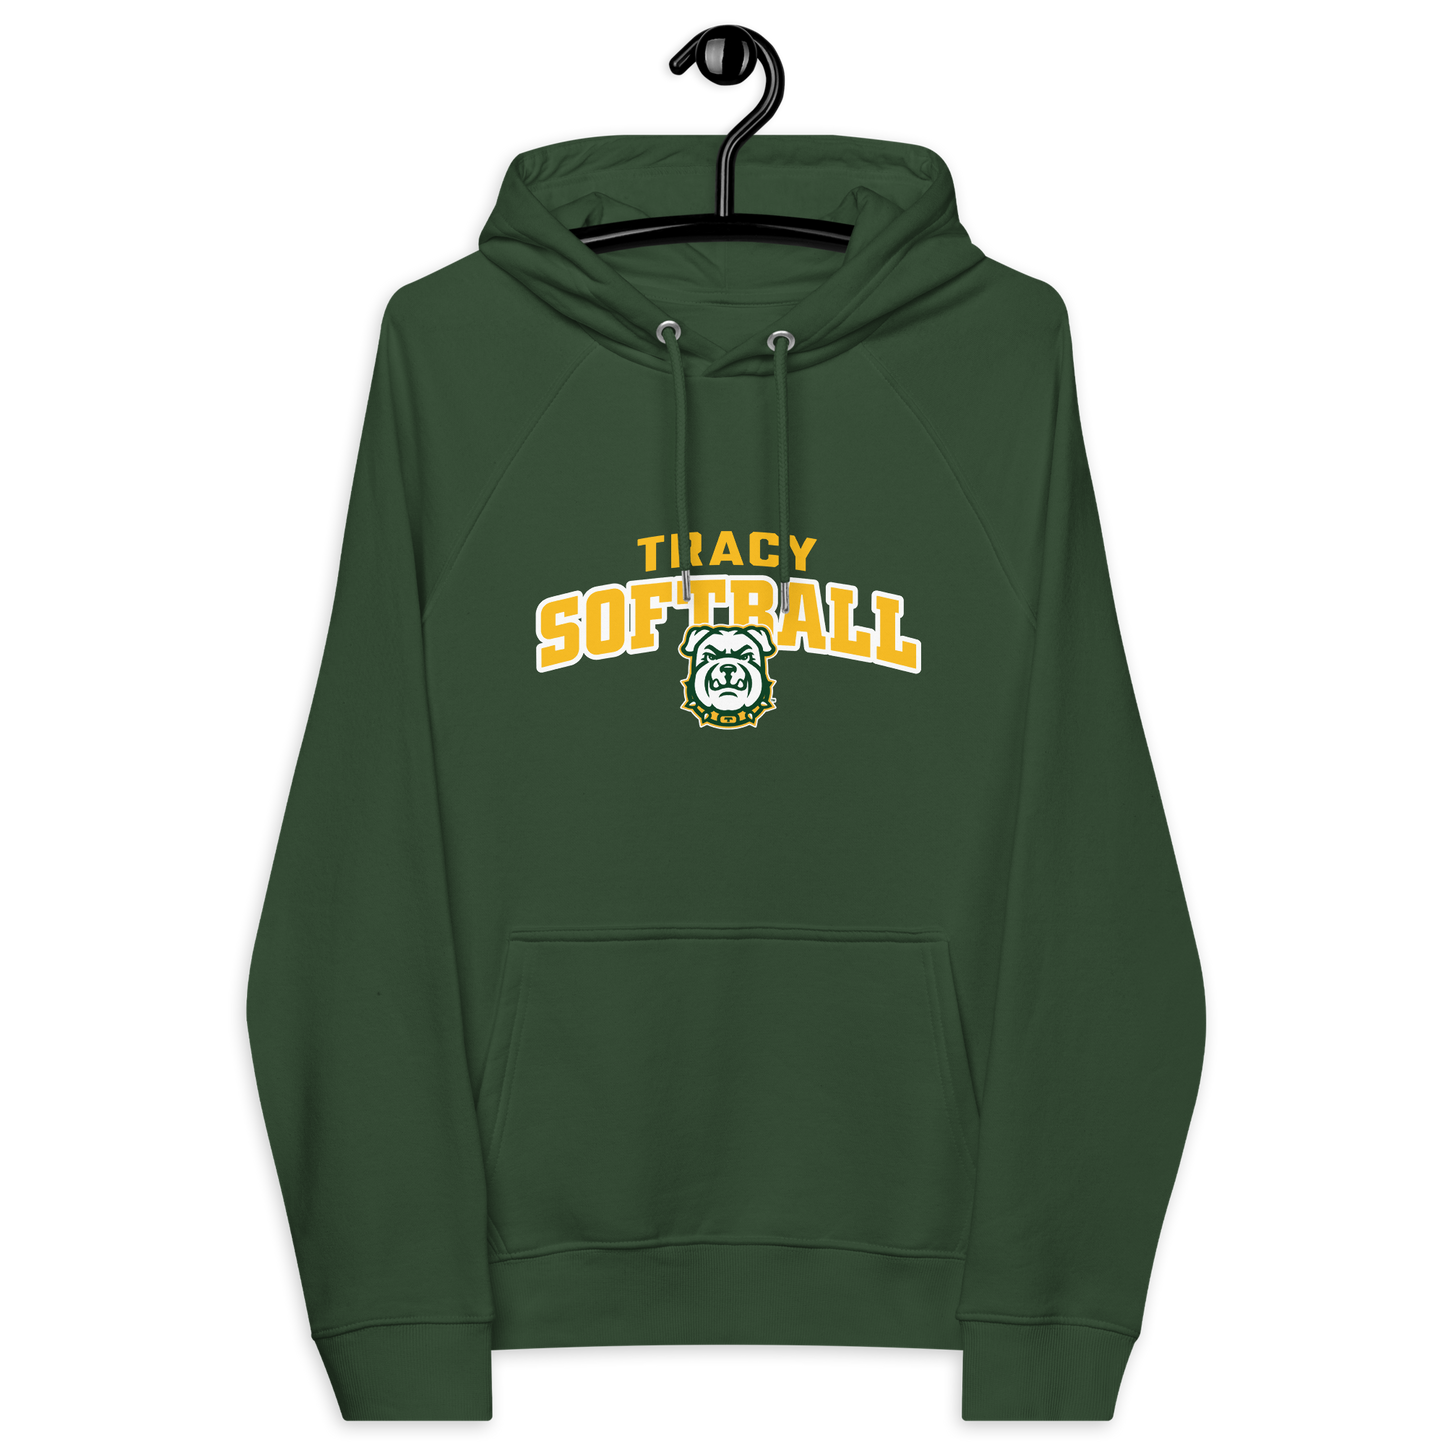 Tracy Softball Unisex eco raglan hoodie